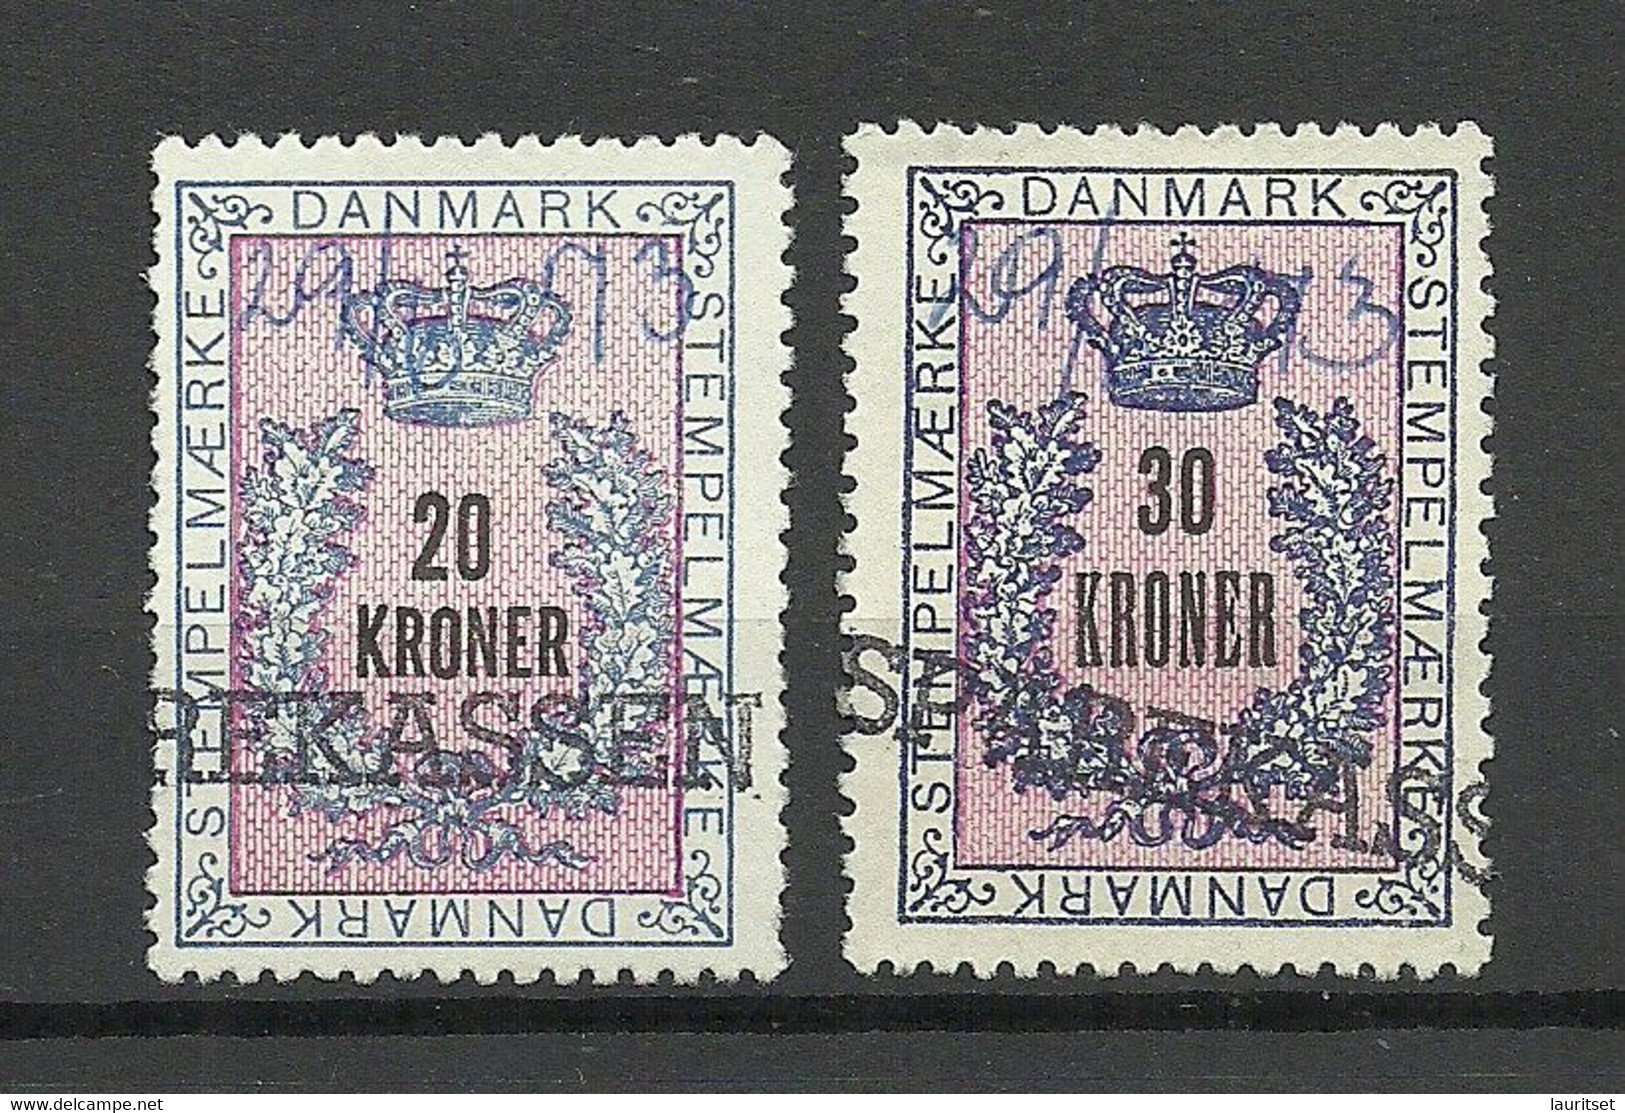 DENMARK Dänemark O 1973 Sparekassen Tax Stempelmarken Documentary Taxe Revenue Samps - Steuermarken